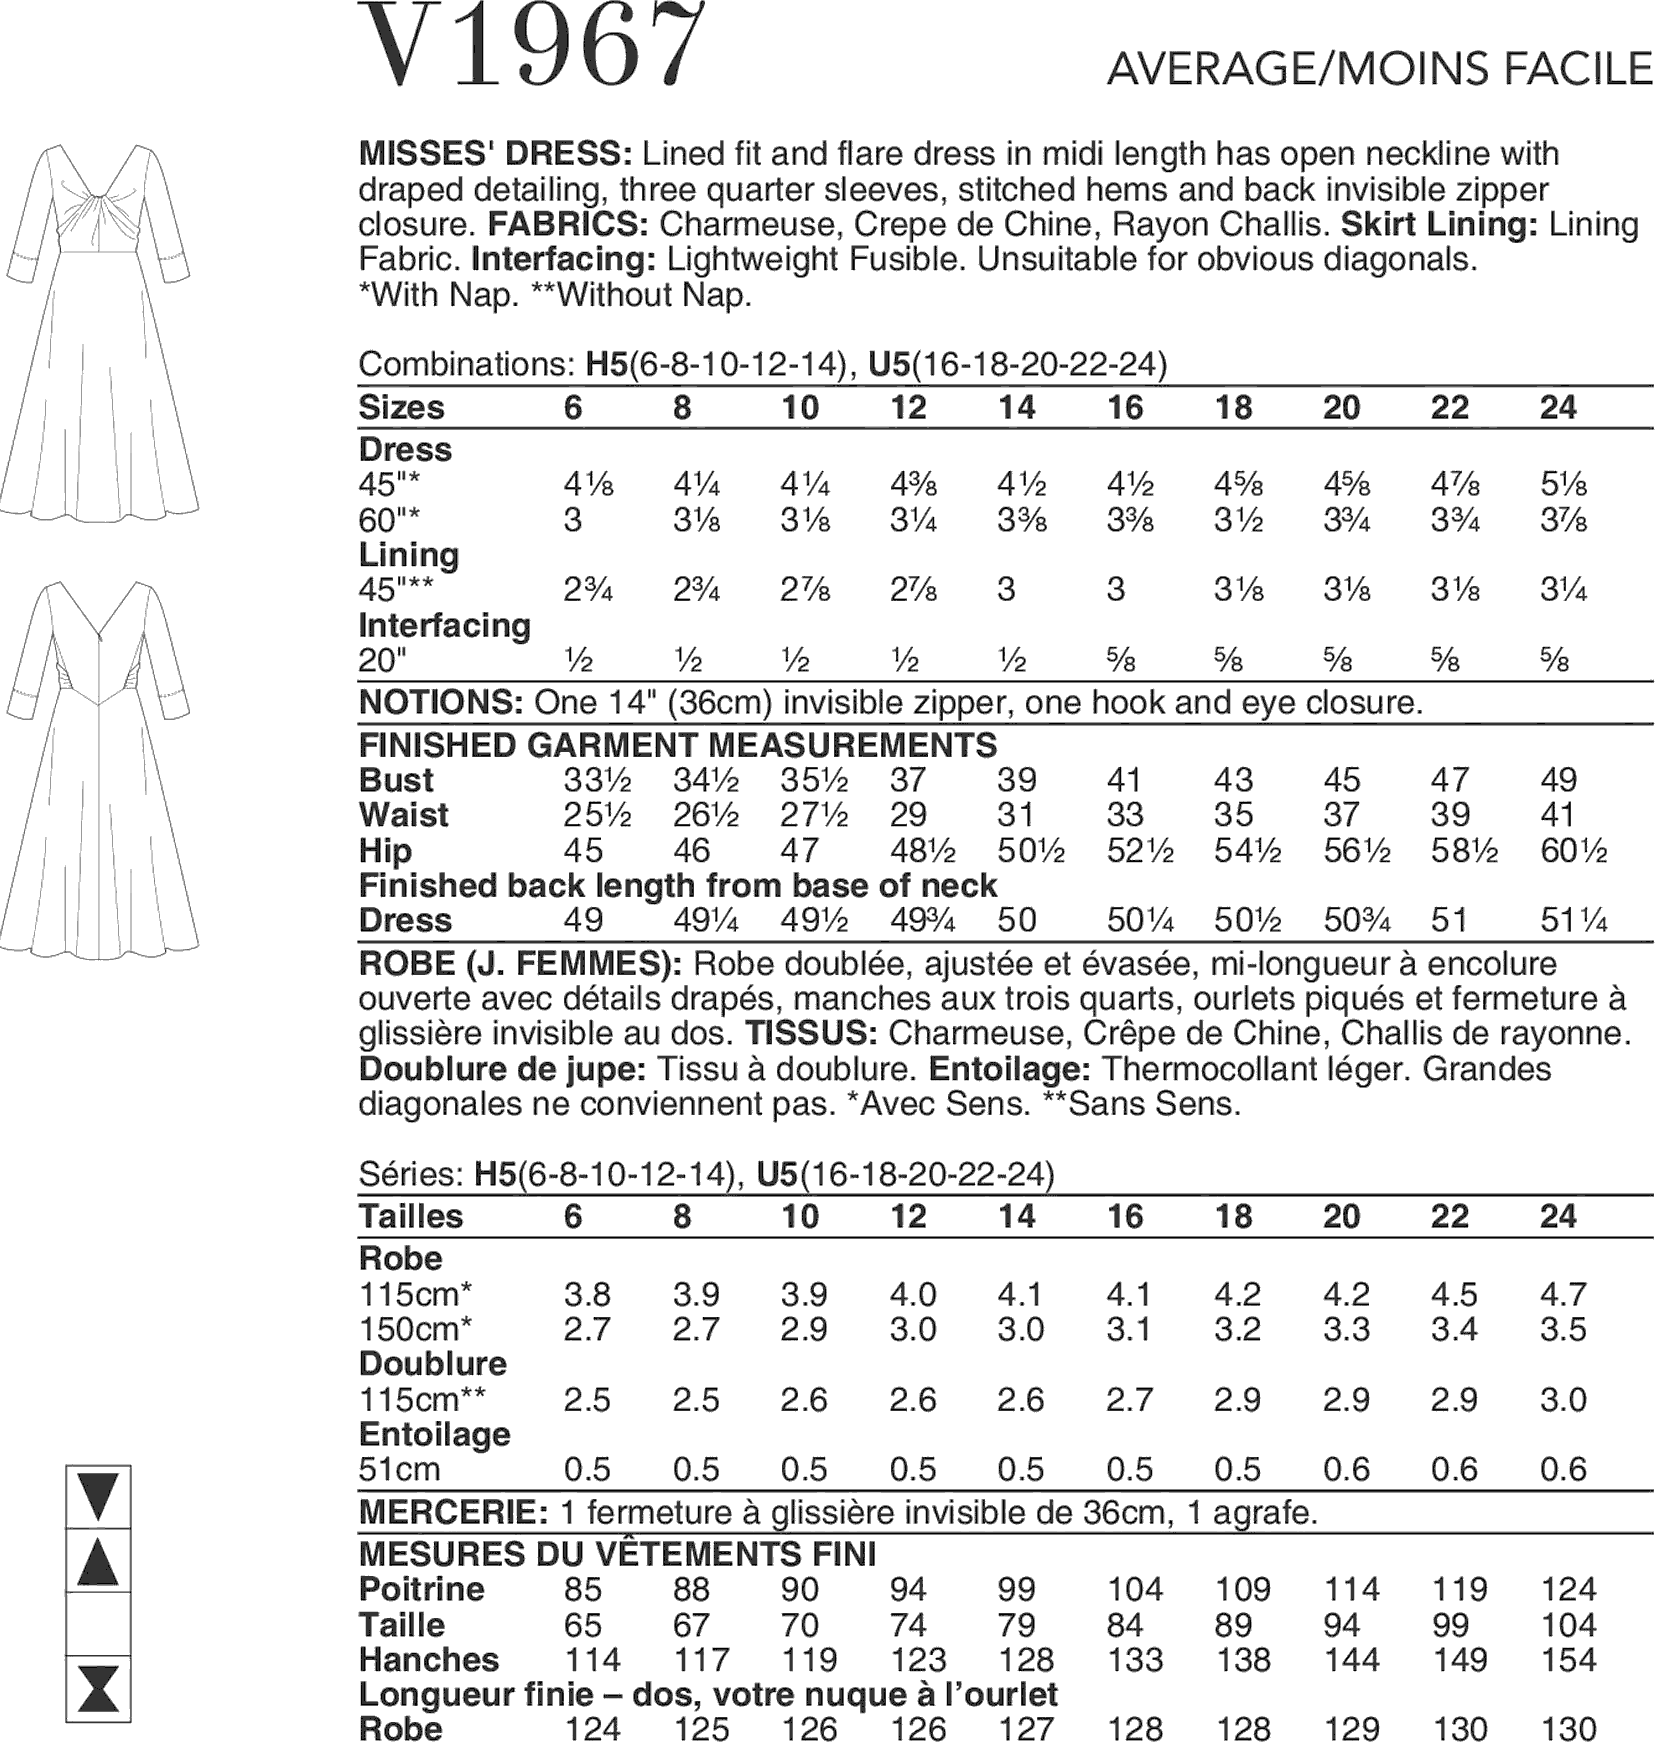 Vogue Pattern V1967 Misses Dress by Rachel Comey 1967 Fabric Quantity Requirements From Patternsandplains.com